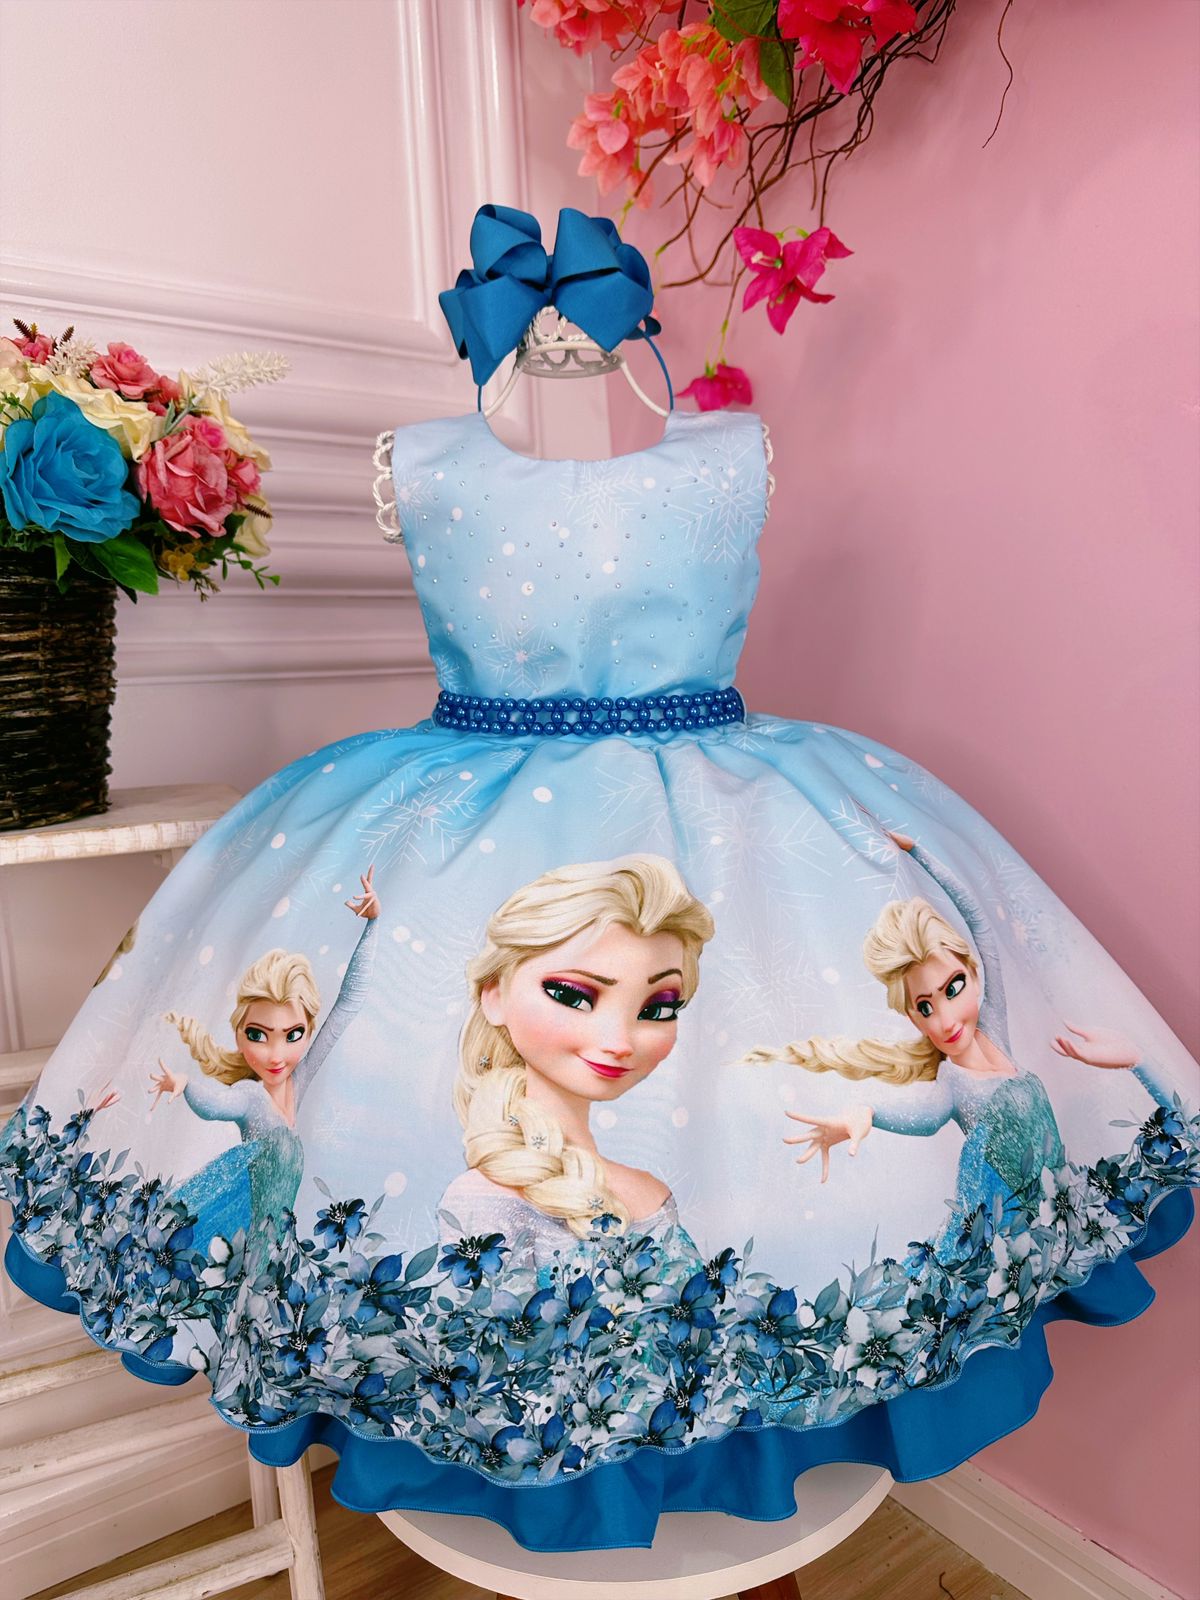 Vestido Infantil Frozen Elsa Azul C/ Strass no Peito